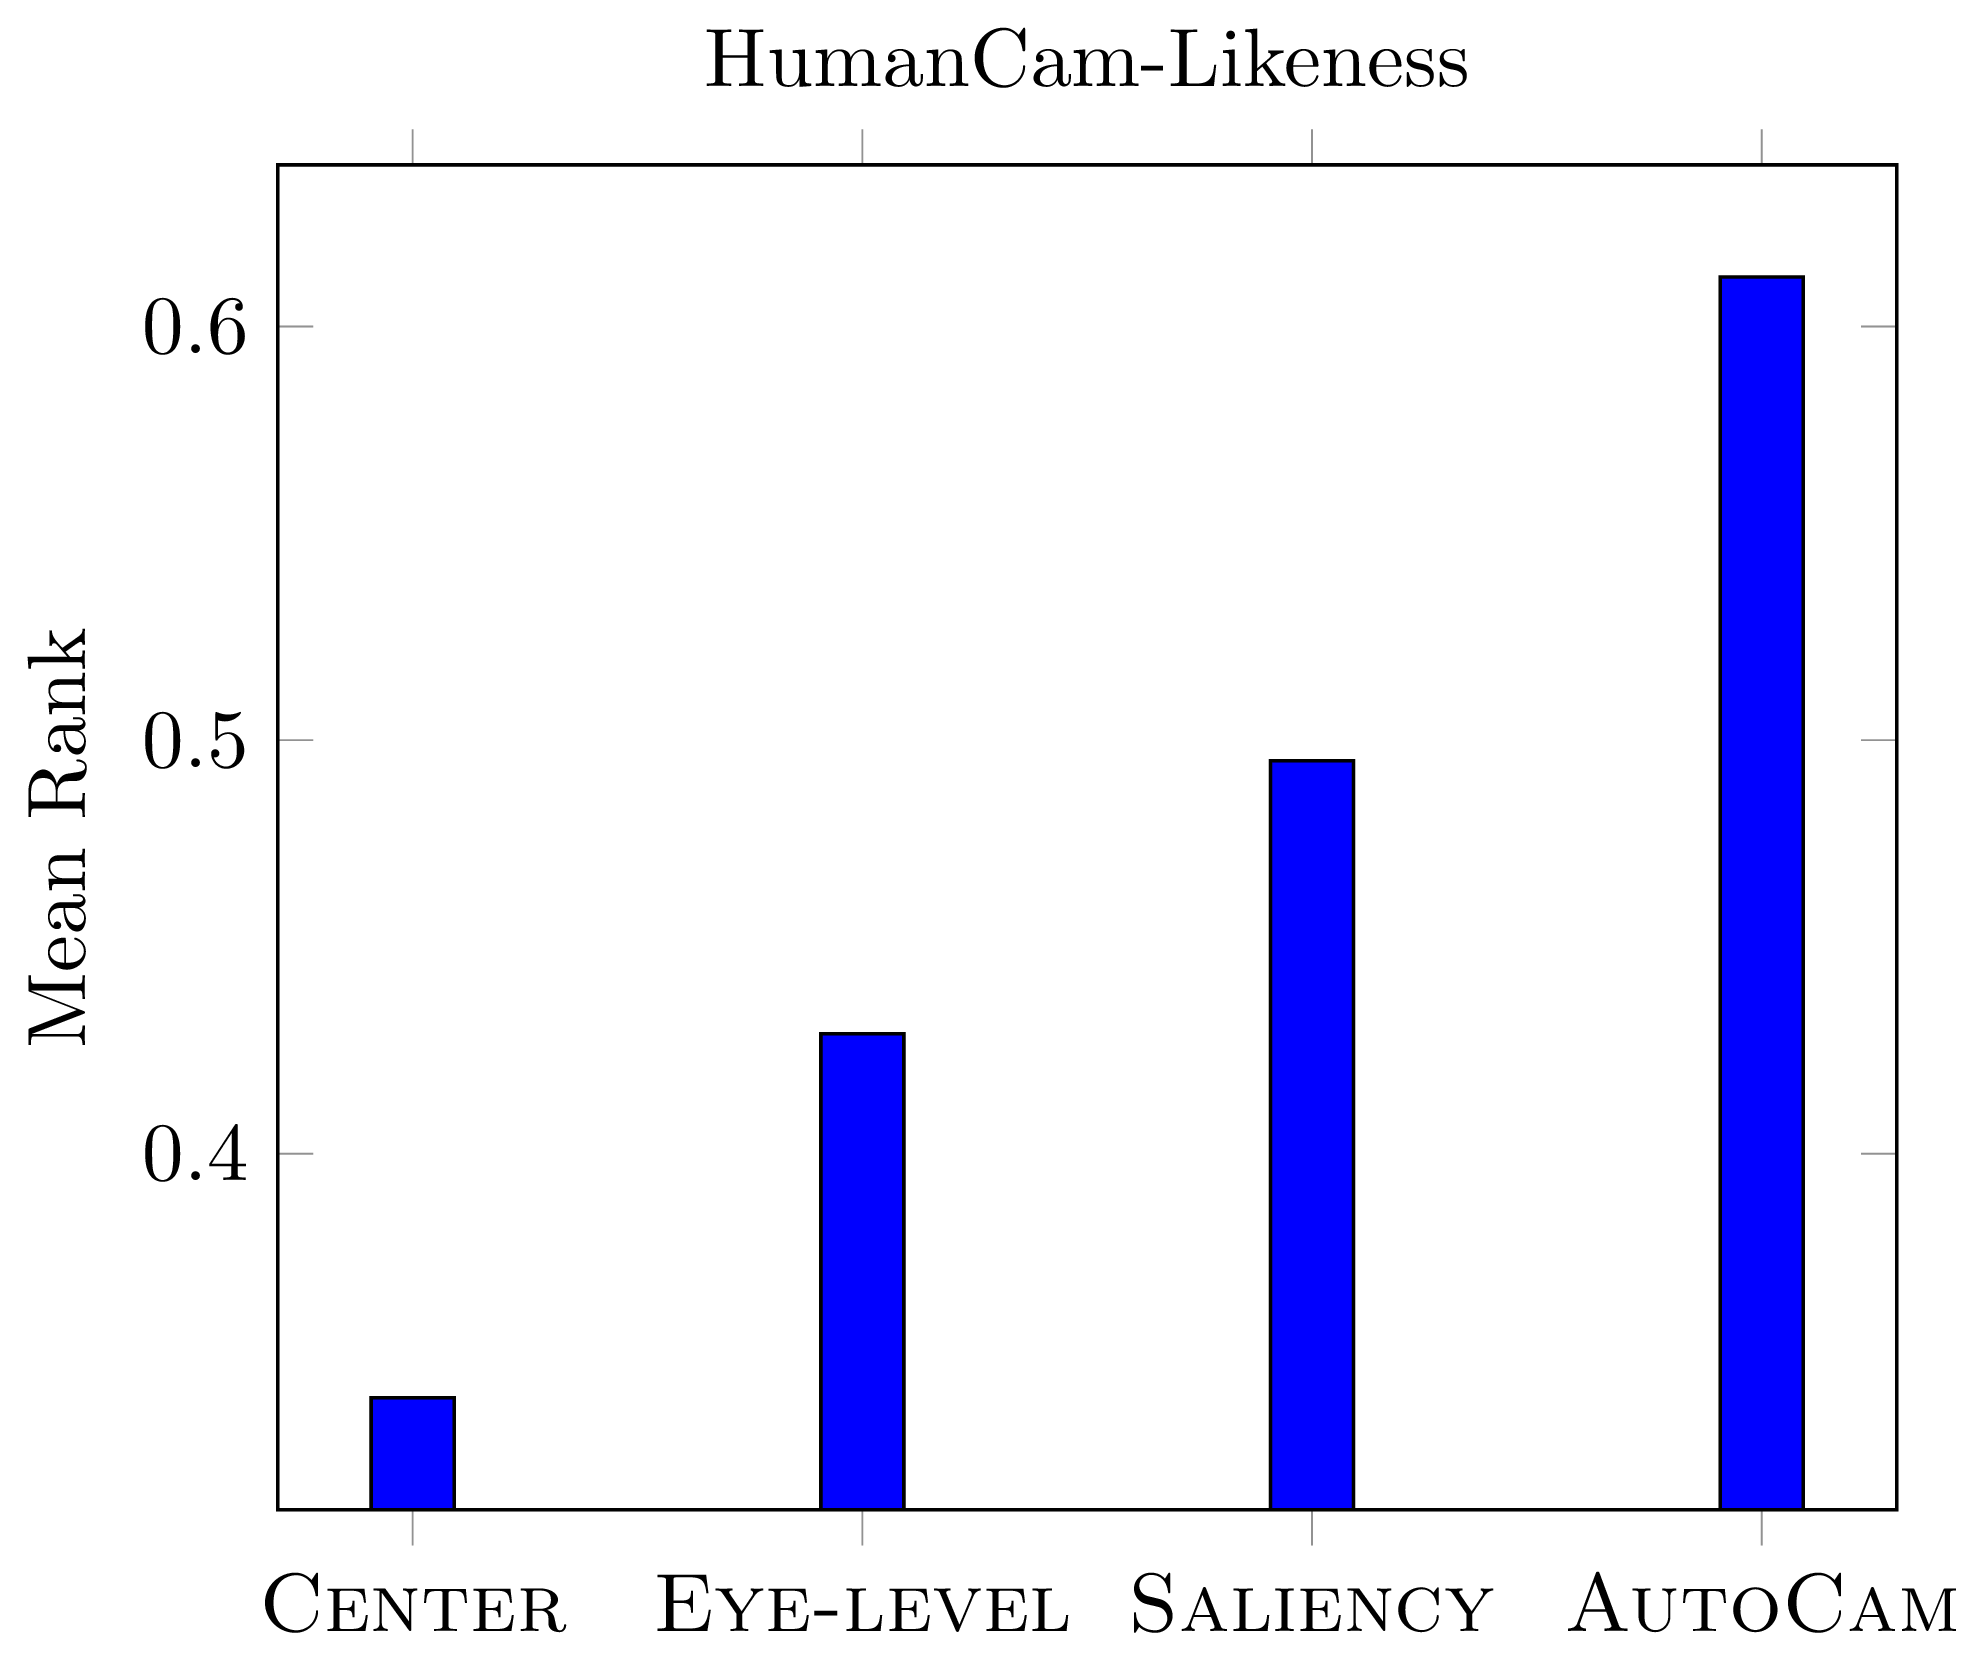 HumanCam-Likeness